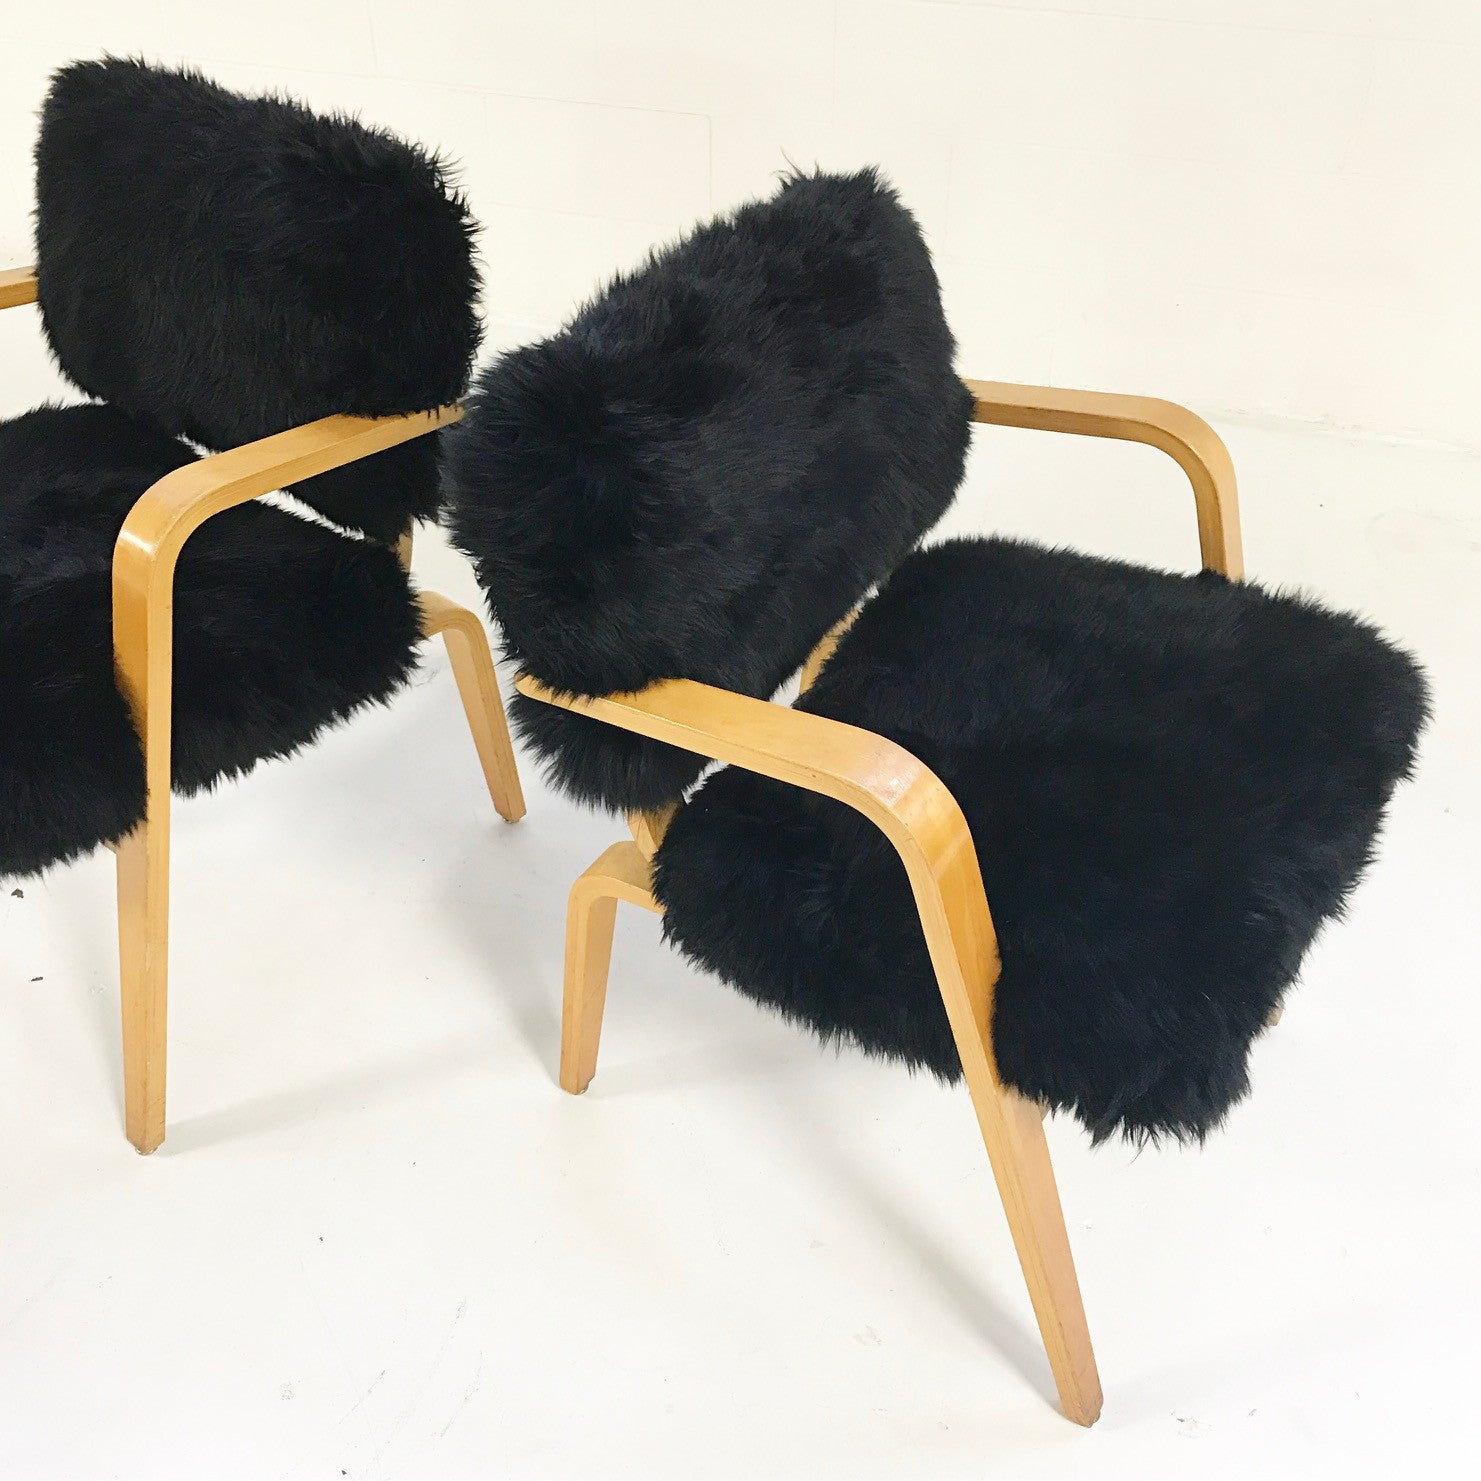 Armchairs in New Zealand Sheepskin, pair - FORSYTH